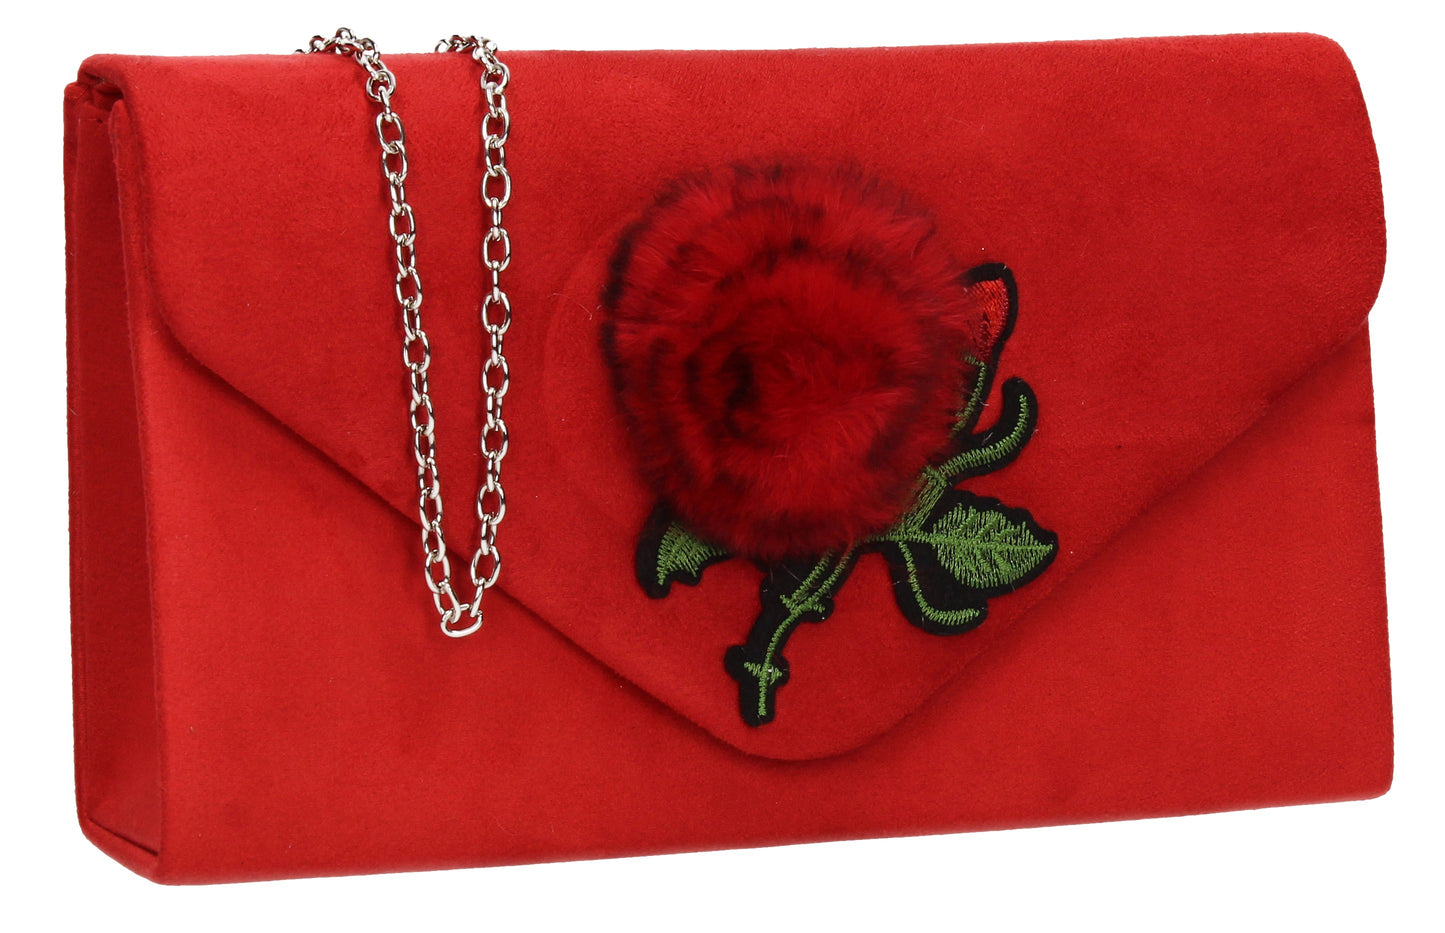 SWANKYSWANS Roxanne Fur Rose Clutch Bag Red Cute Cheap Clutch Bag For Weddings School and Work